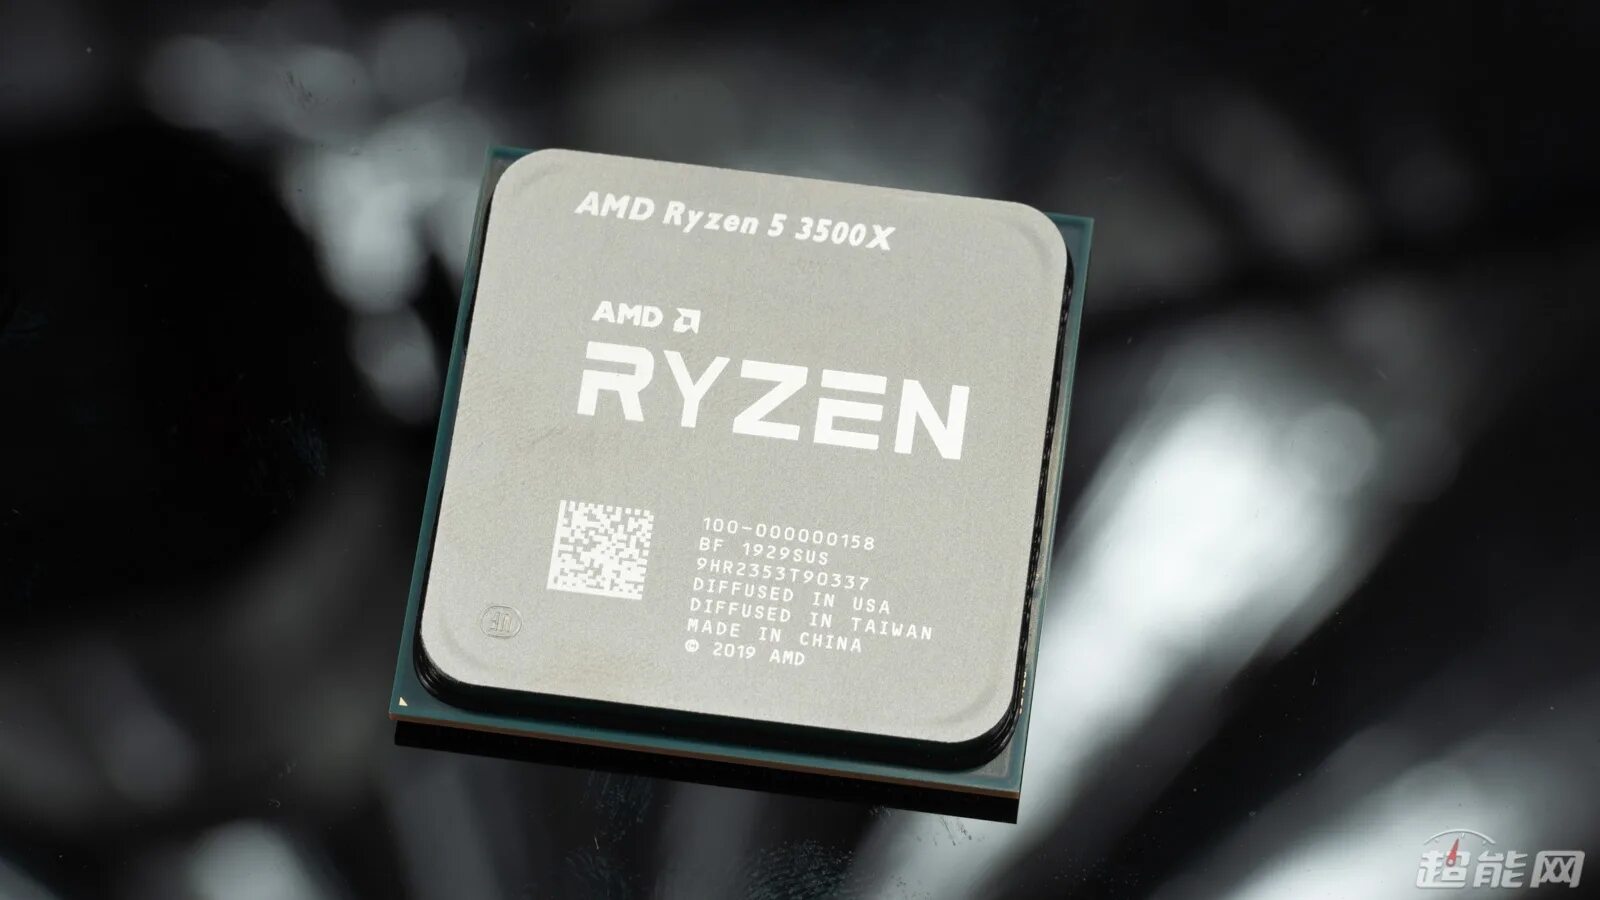 Ryzen 5 3500x. Процессор AMD Ryzen 5 3500. Процессор AMD Ryzen 5 2600 am4. Процессор AMD Ryzen 5 3500x OEM.